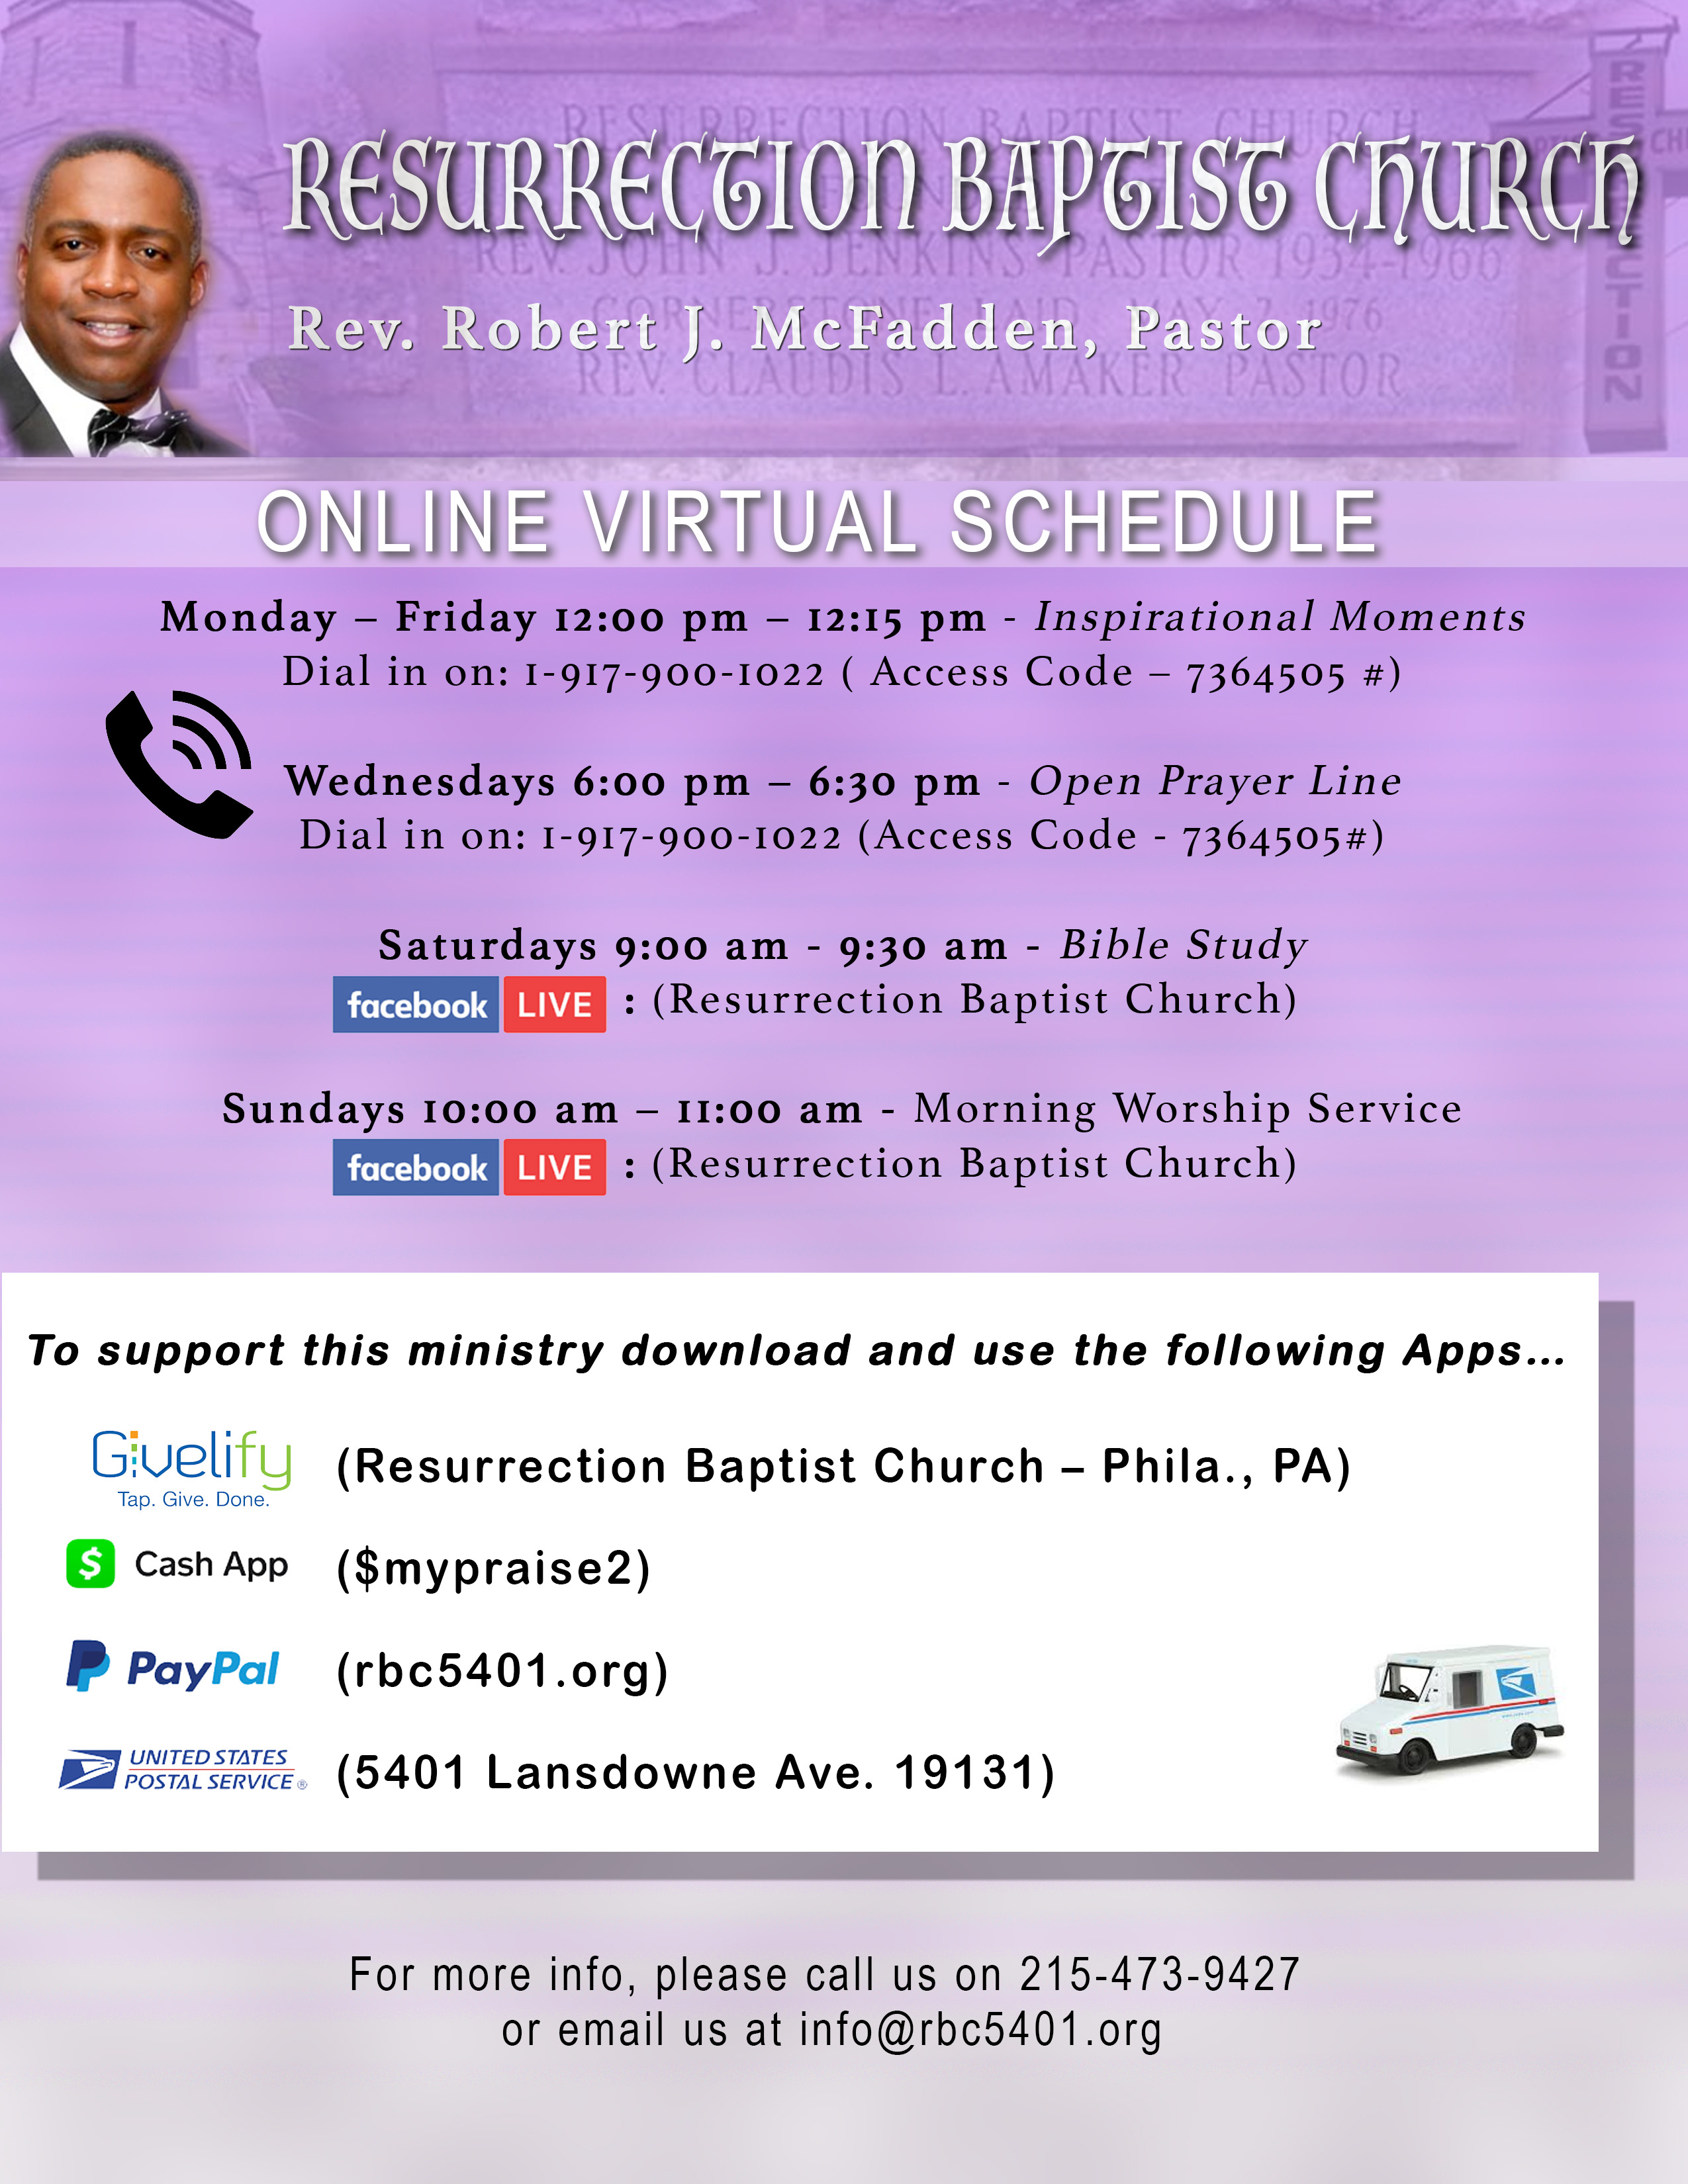 Rbc5401.0Rg Resurrection Baptist Church Located At 5401 Lansdowne Avenue Philadelphia, Pa